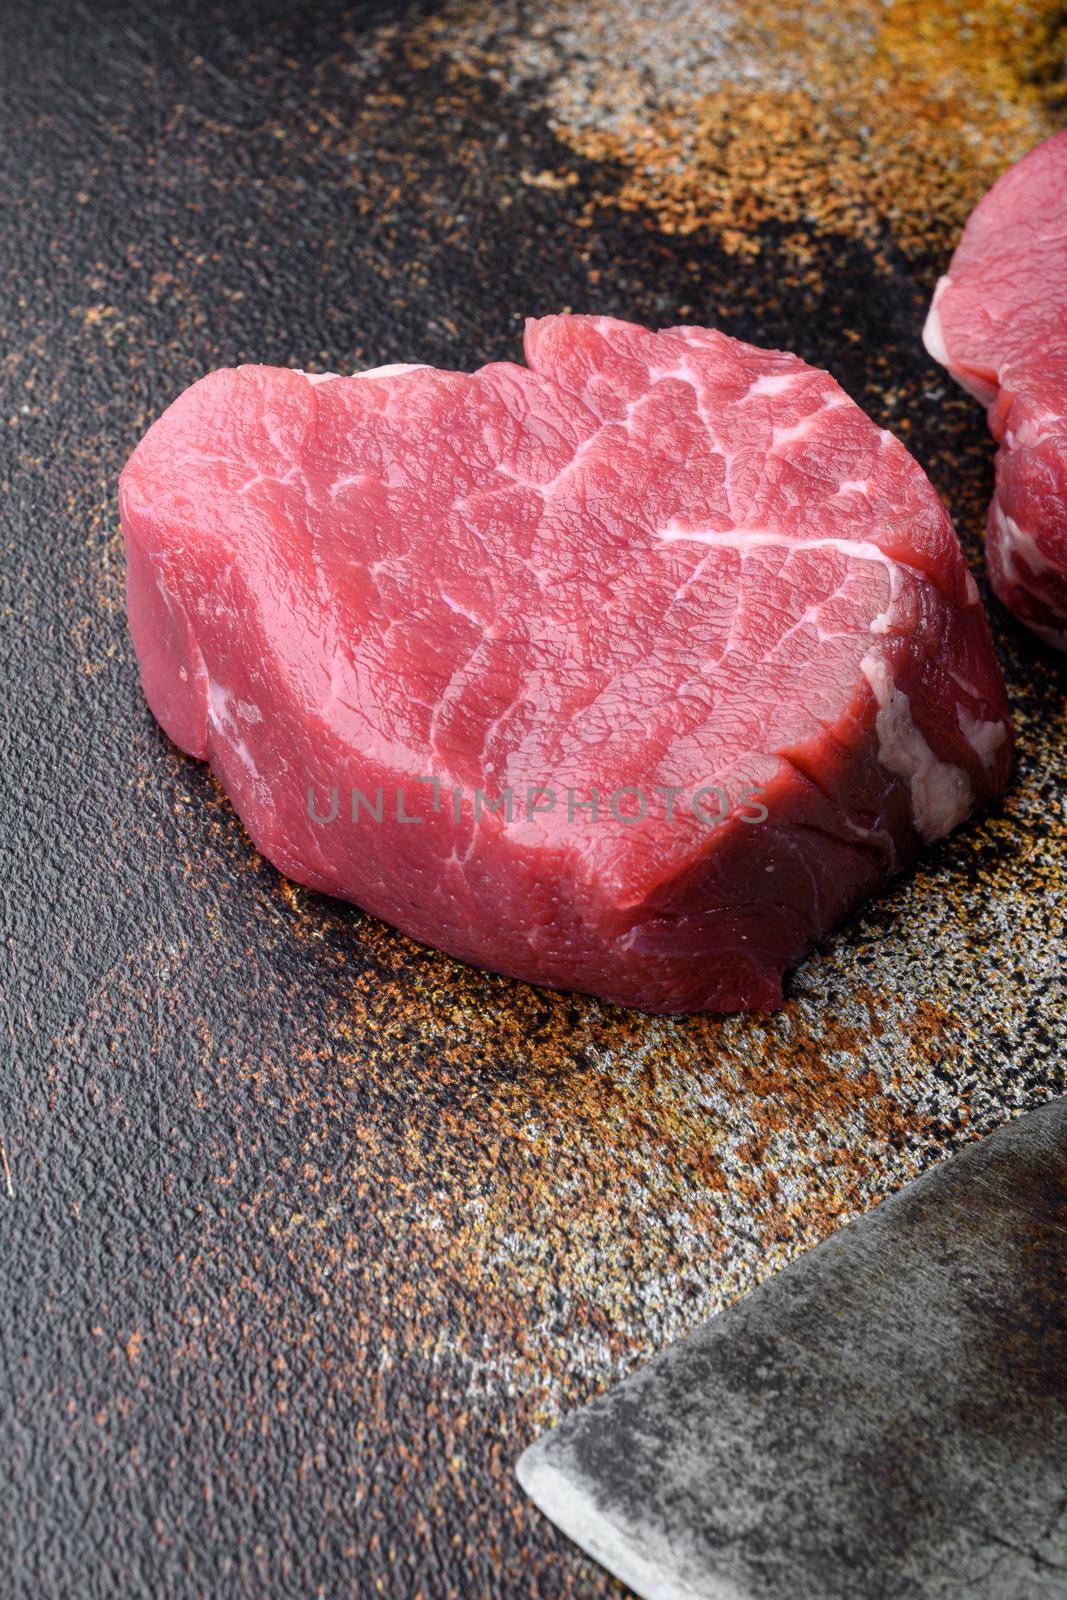 Fillet mignon steak raw, on old dark rustic background by Ilianesolenyi